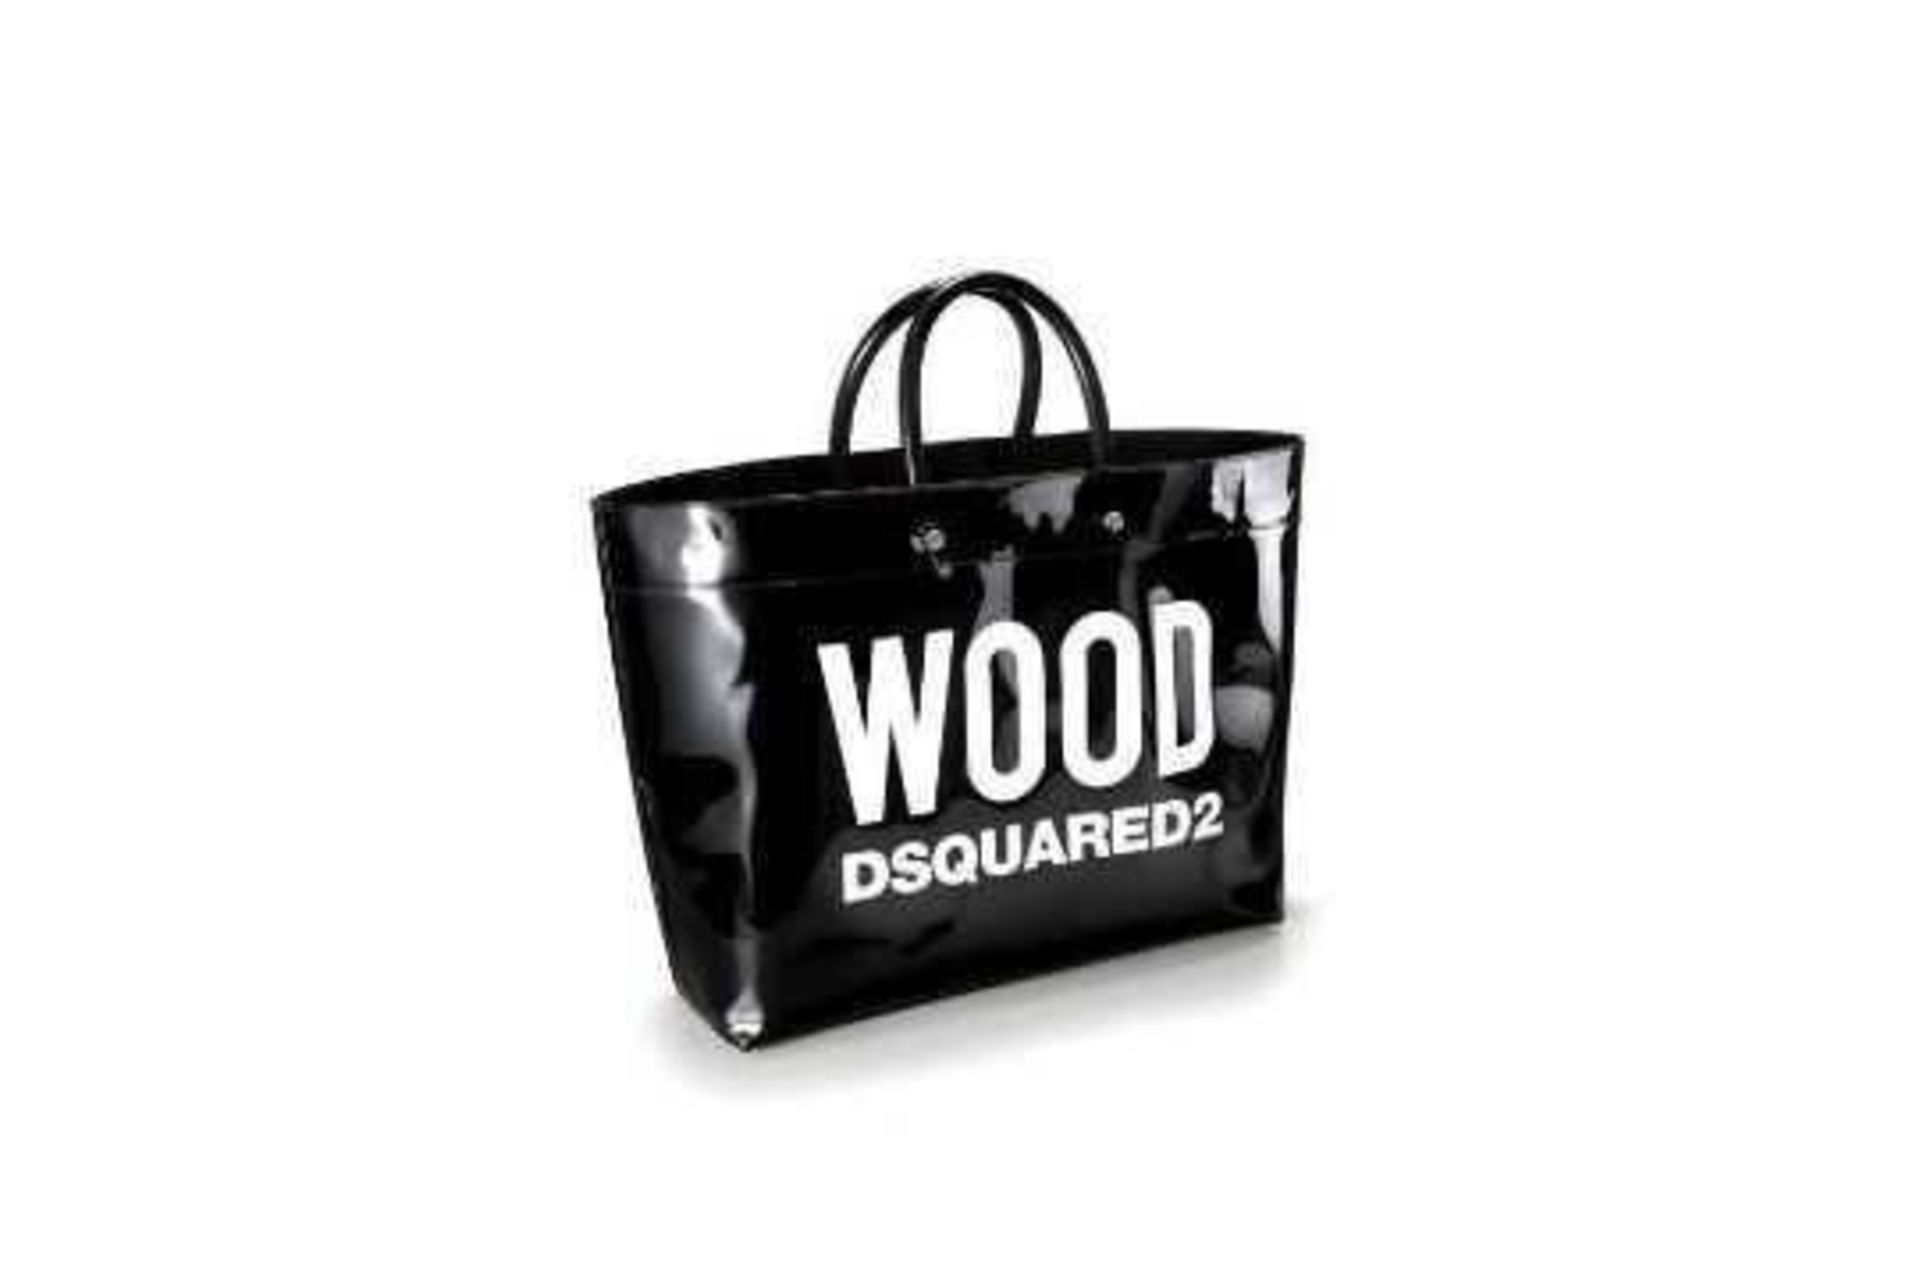 RRP £200 Dsquared2 Wood Black Pvc Tote Bag